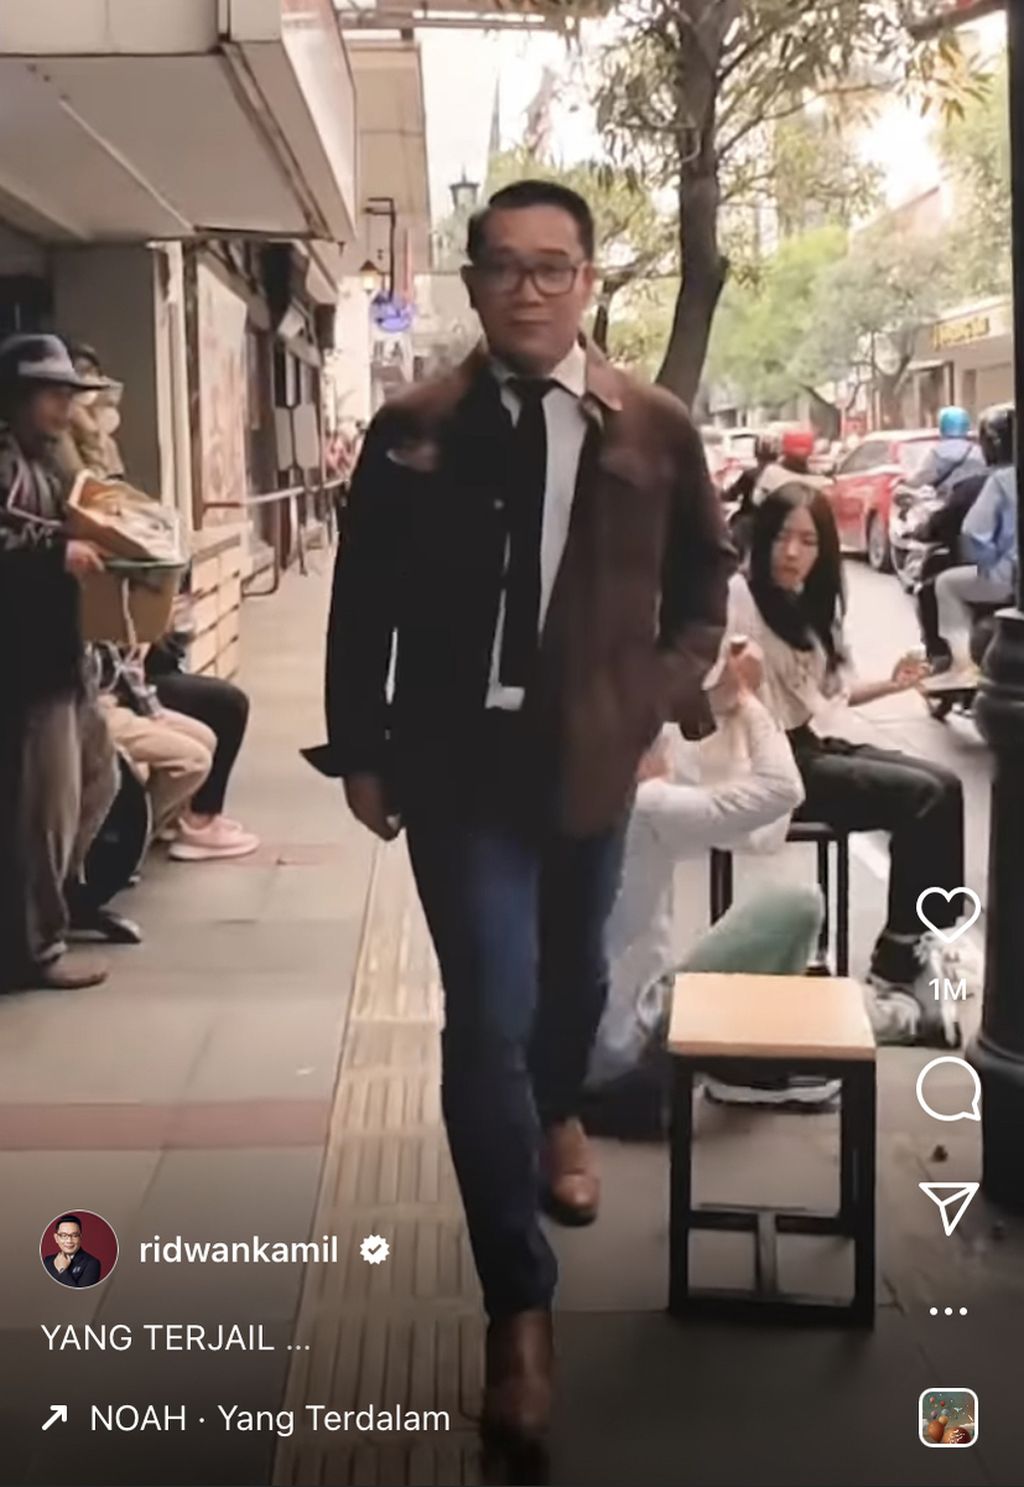 Tangkapan layar akun Instagram @ridwankamil yang menampilkan video Gubernur Jawa Barat Ridwan Kamil saat sedang memparodikan video musik grup band Noah yang berjudul ”Yang Terdalam”.